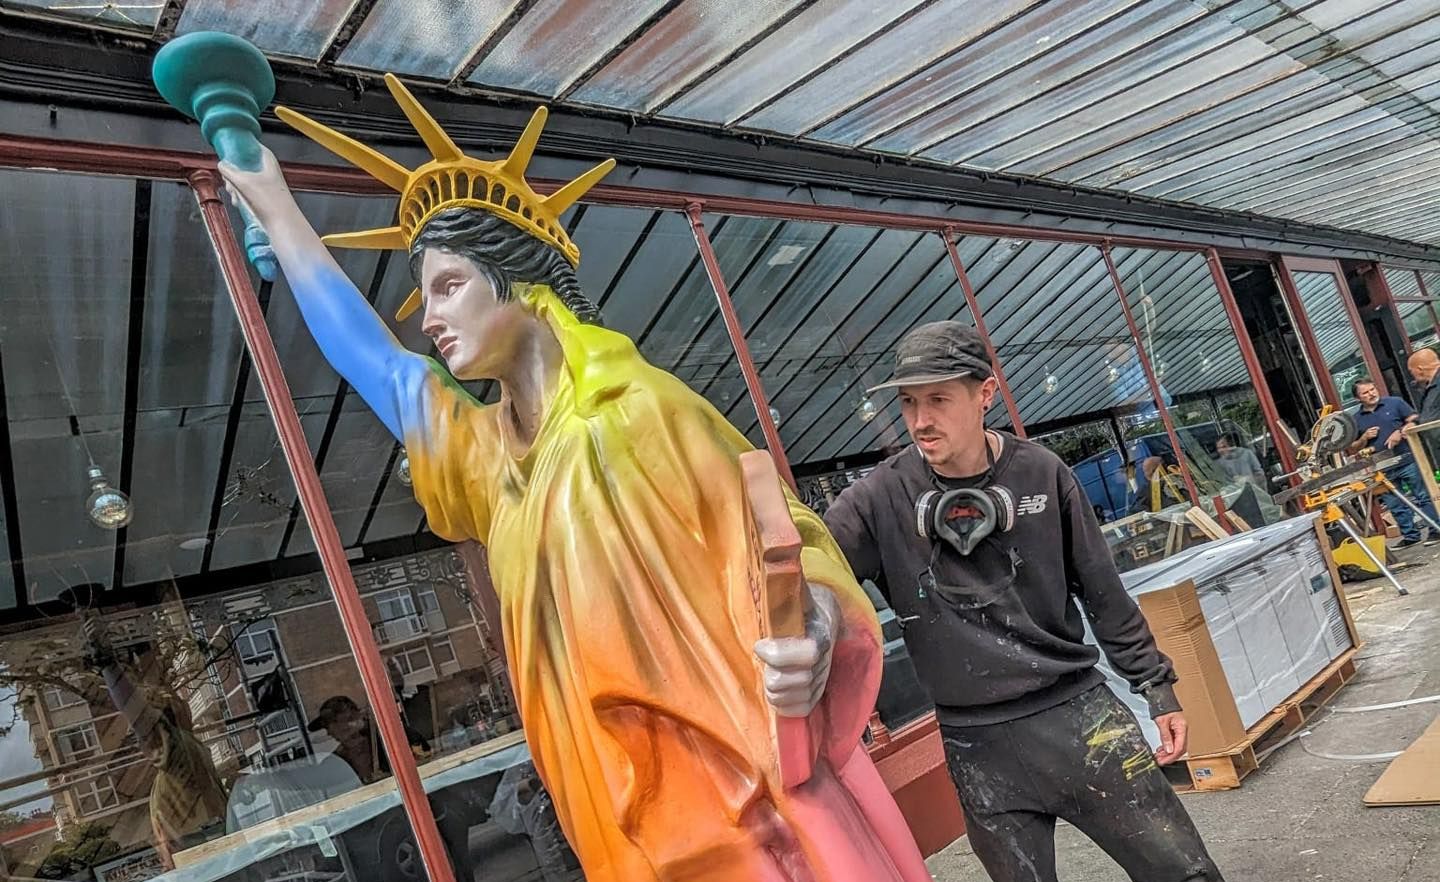 Southport's new Top Gun themed bar, Mavericks, includes a replica Statue Of Liberty